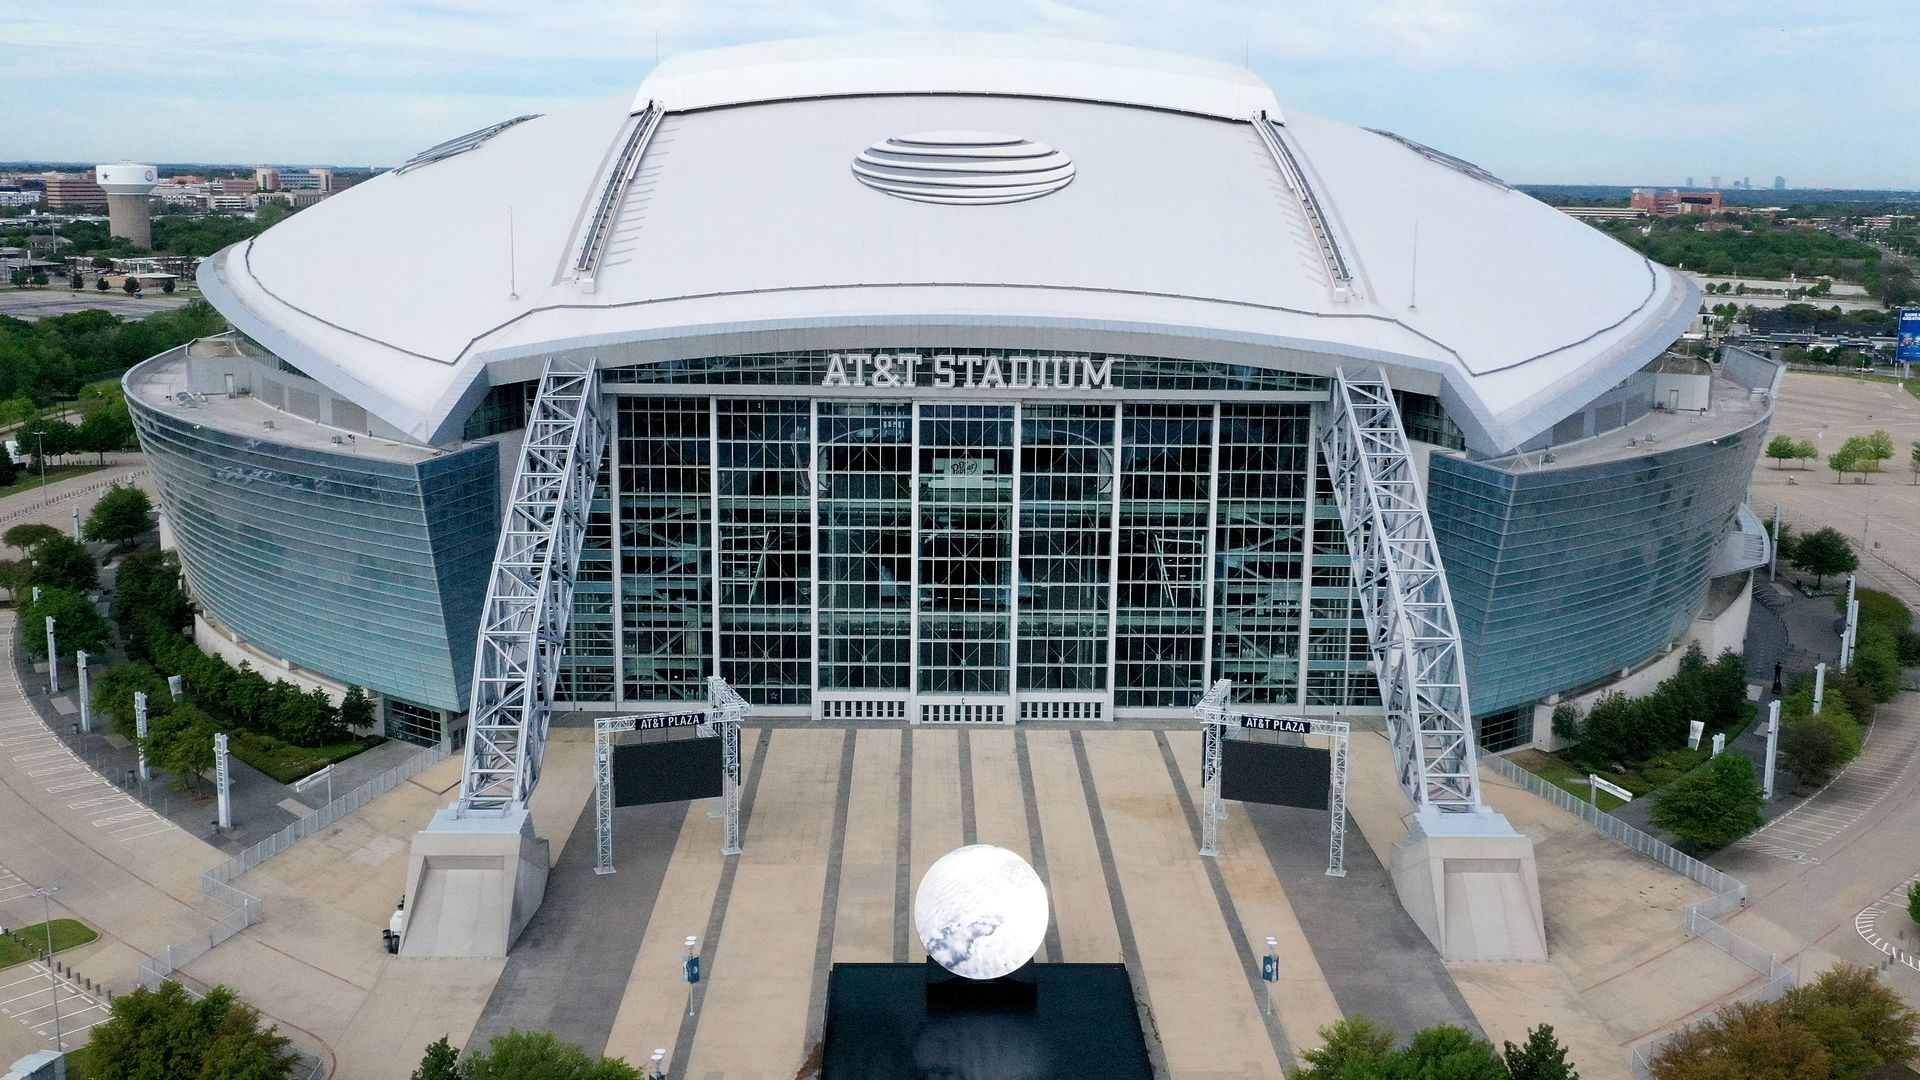 AT&T Stadium, where the Dallas Cowboys NFL football